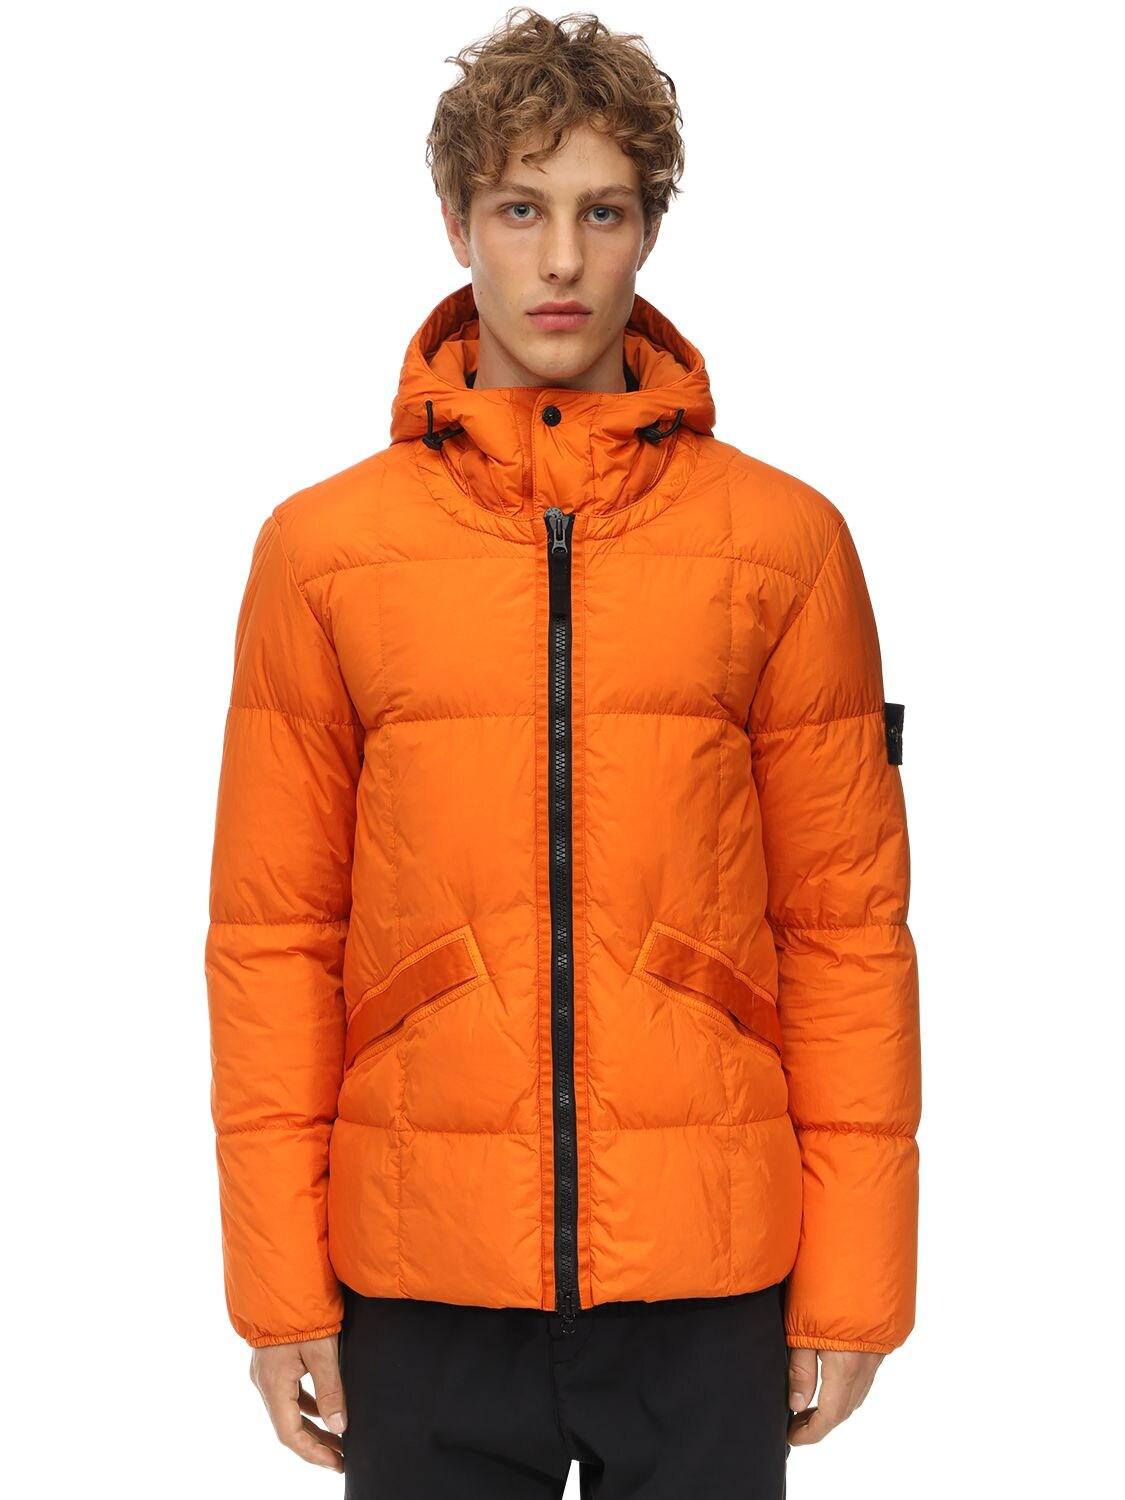 Stone Island Synthetic Hooded Nylon Puffer Jacket in Orange for Men - Lyst